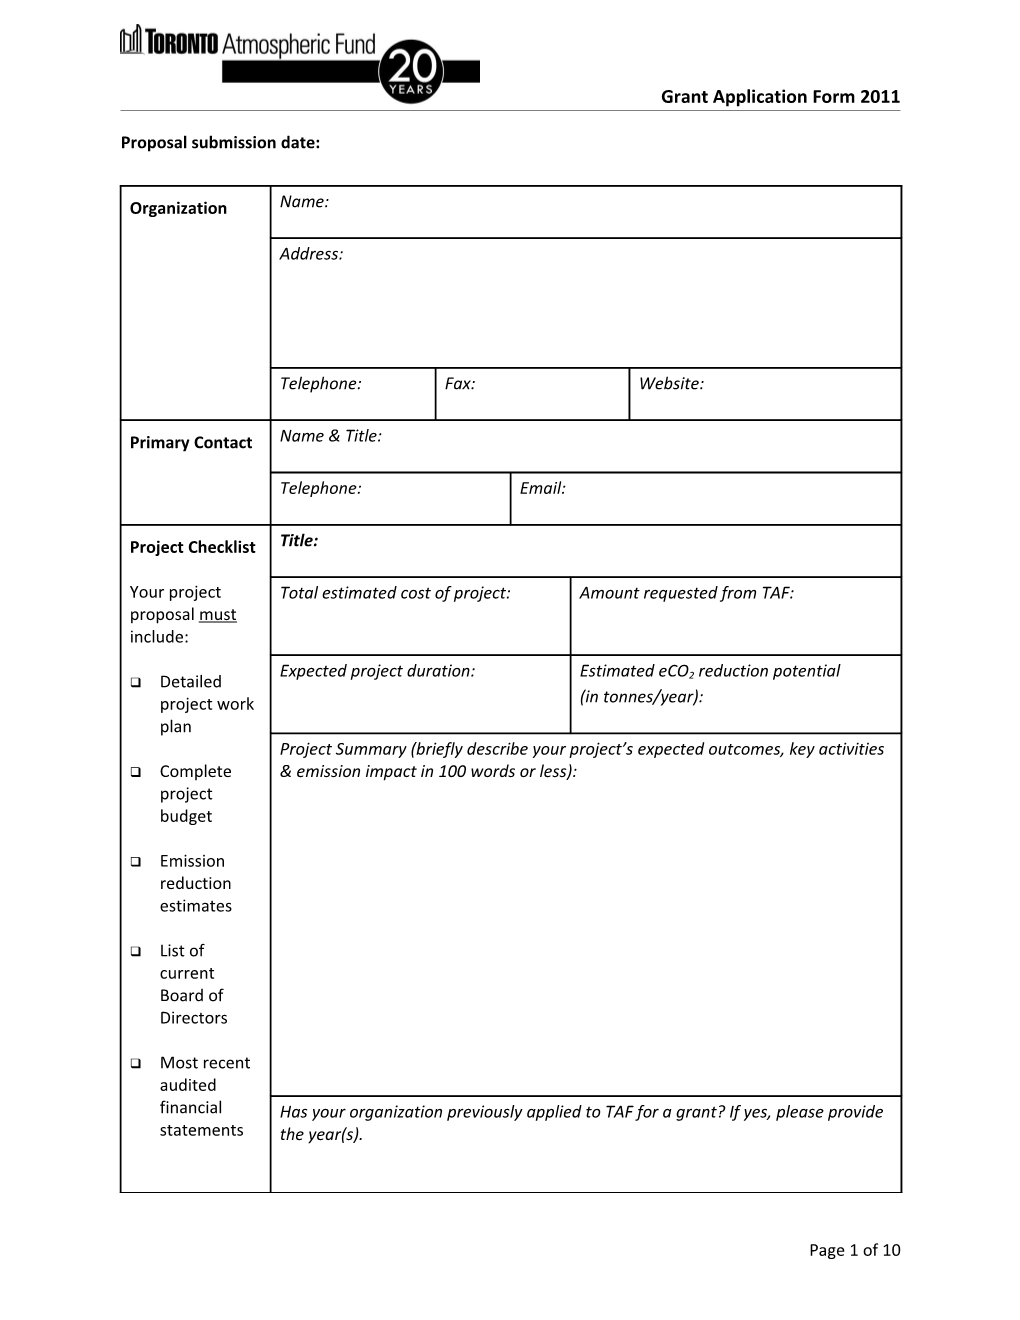 Grant Application Form 2011